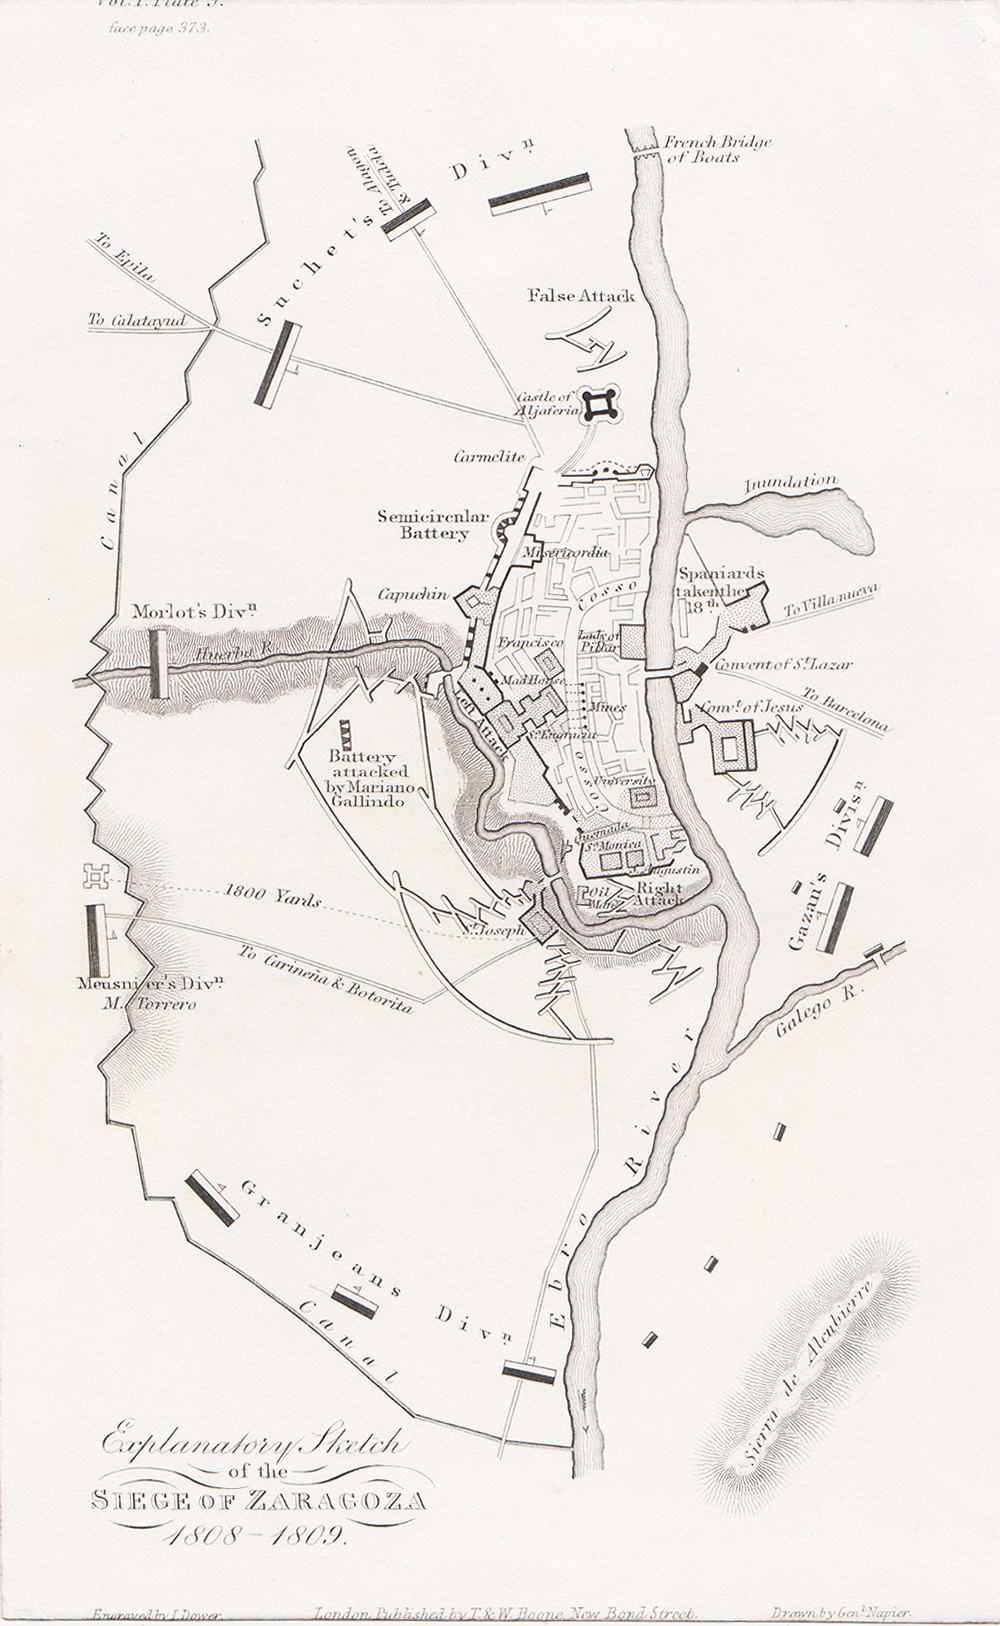 Explanatory Sketch of the Siege of Zaragoza 1808 - 1809